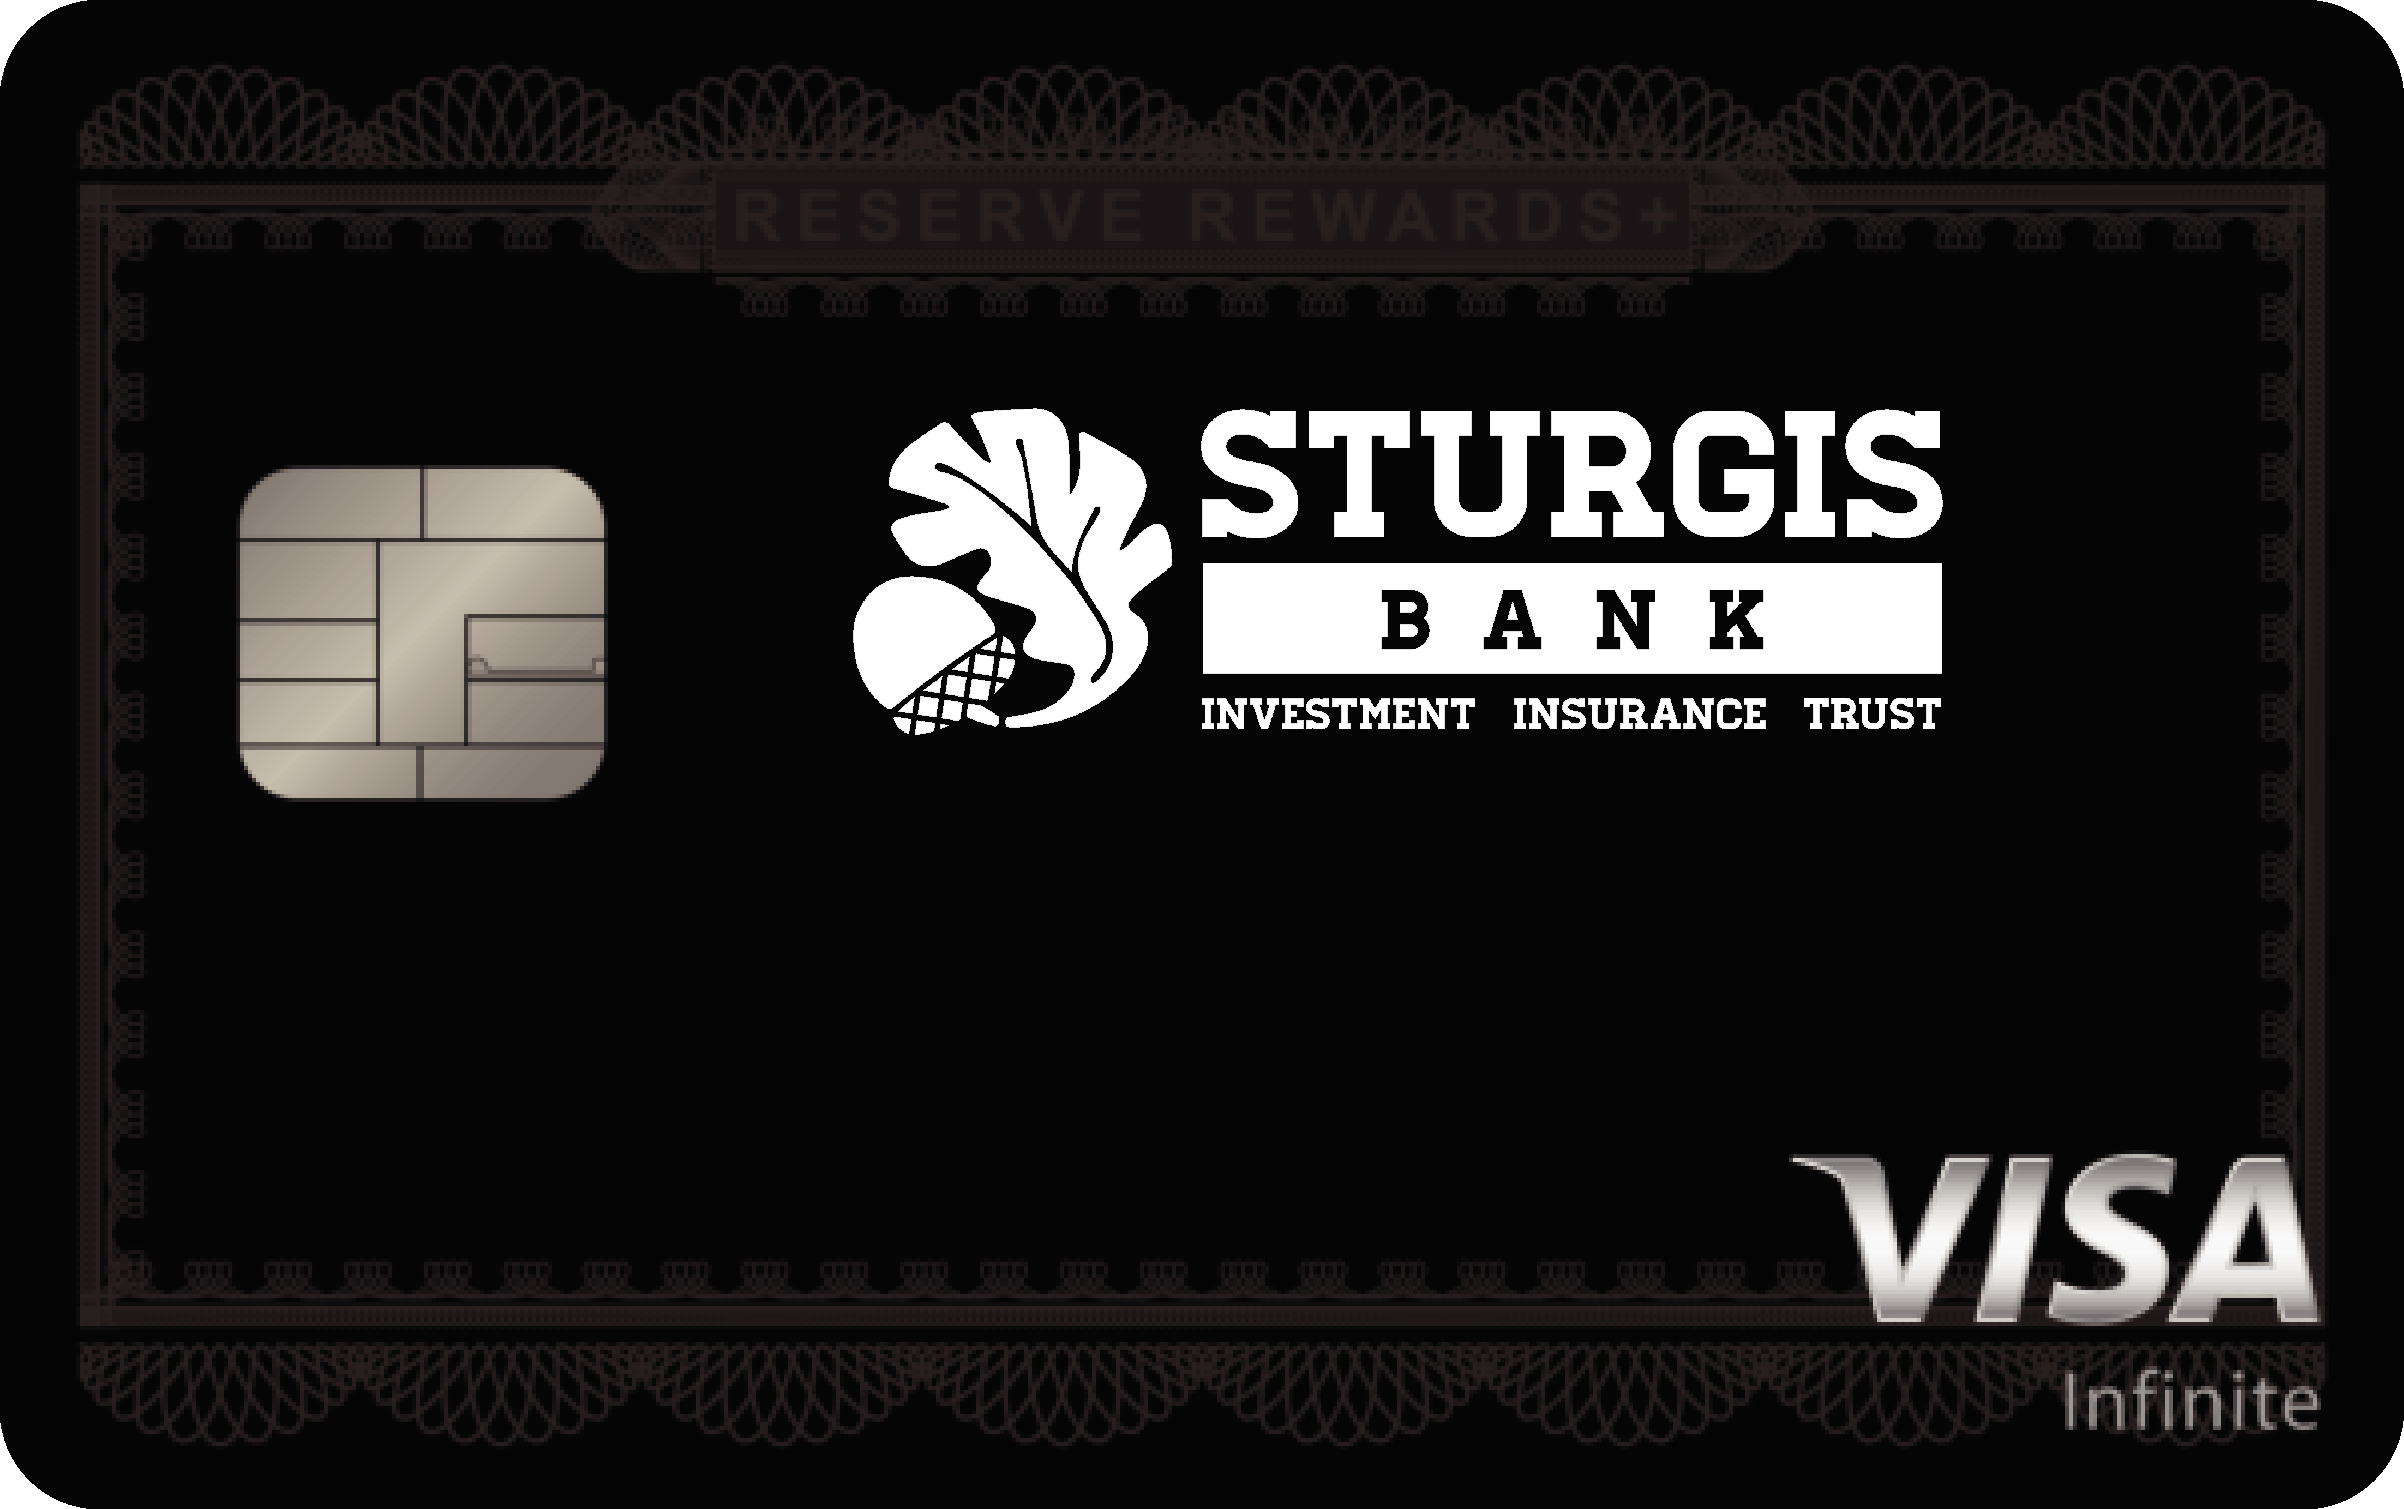 Sturgis Bank